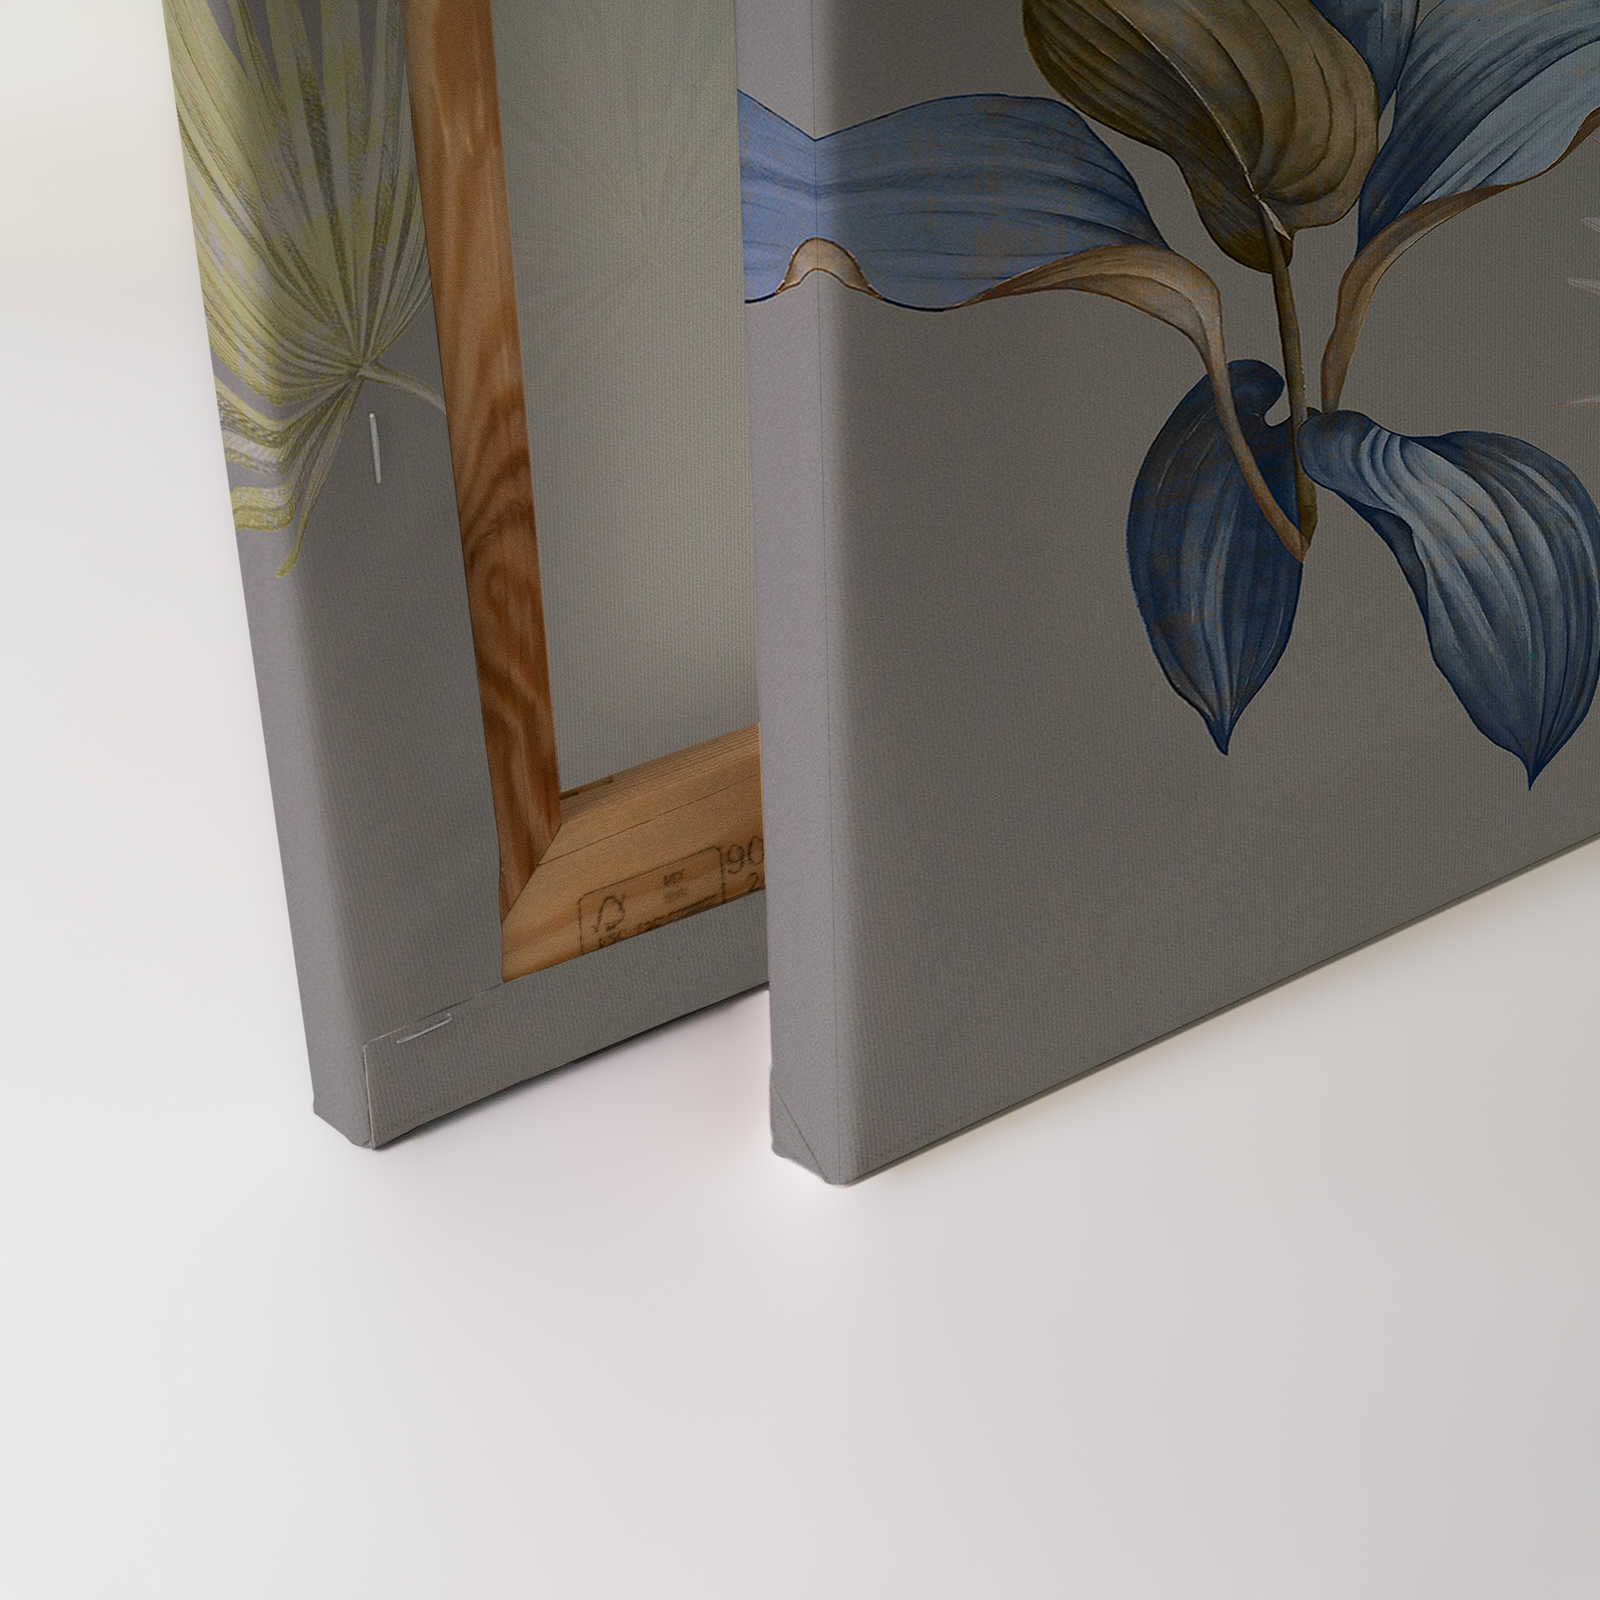             Brasilia 2 - Grey Canvas painting Leaf Design in Sage Green & Royal Blue - 0.90 m x 0.60 m
        